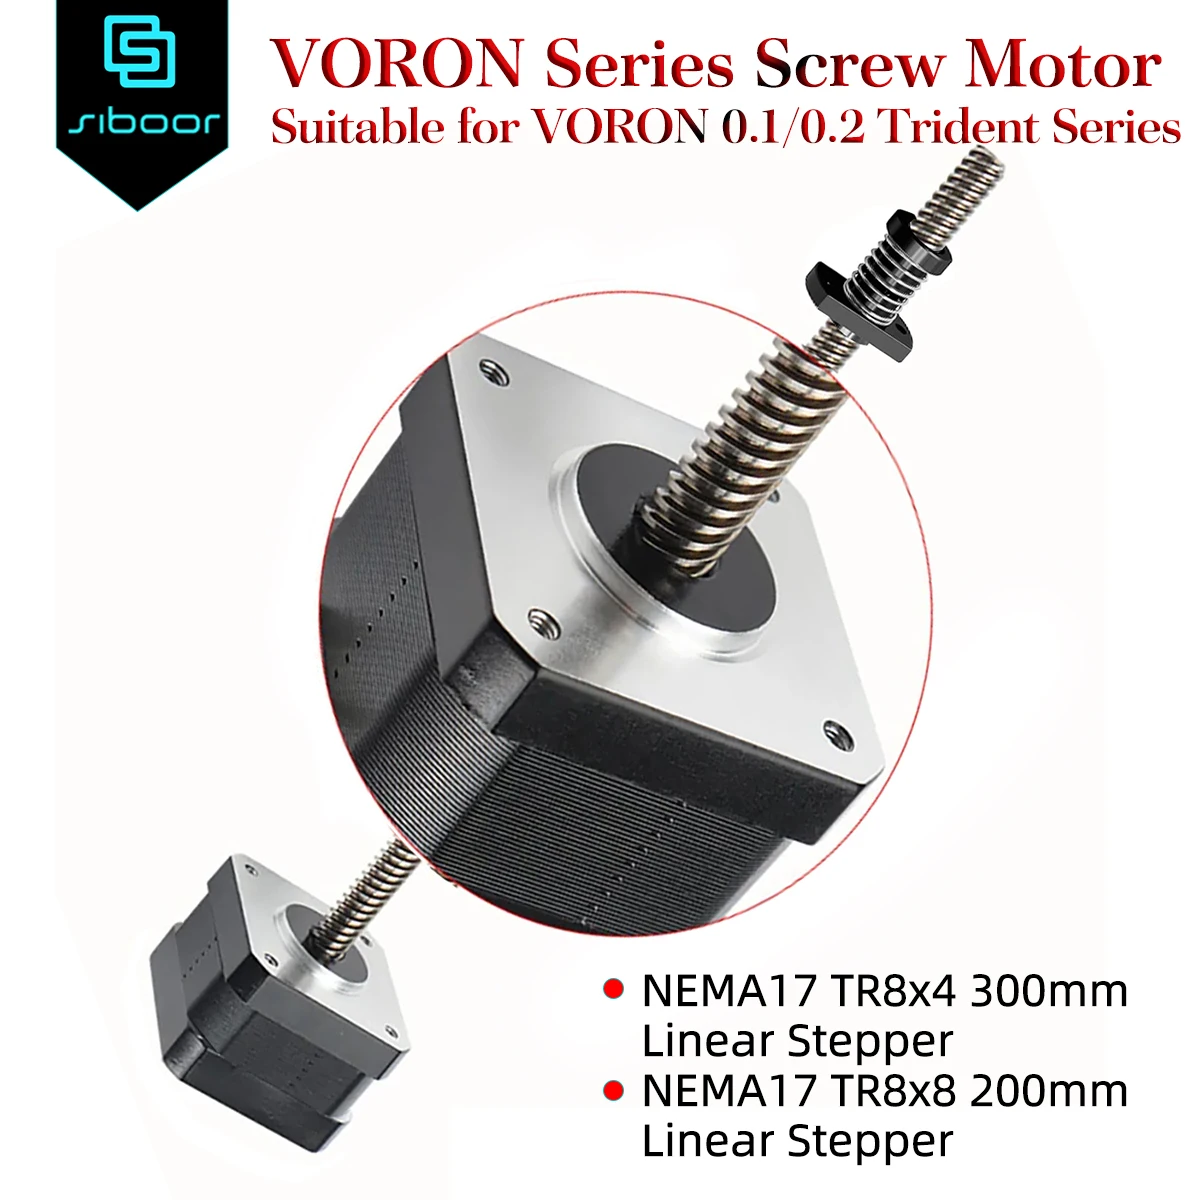 

VORON Trident Screw Motor NEMA17 TR8×8 200mm/TR8x4 300mm Linear Stepper Motor for VORON 0.1/0.2 Trident 3D Printer Series